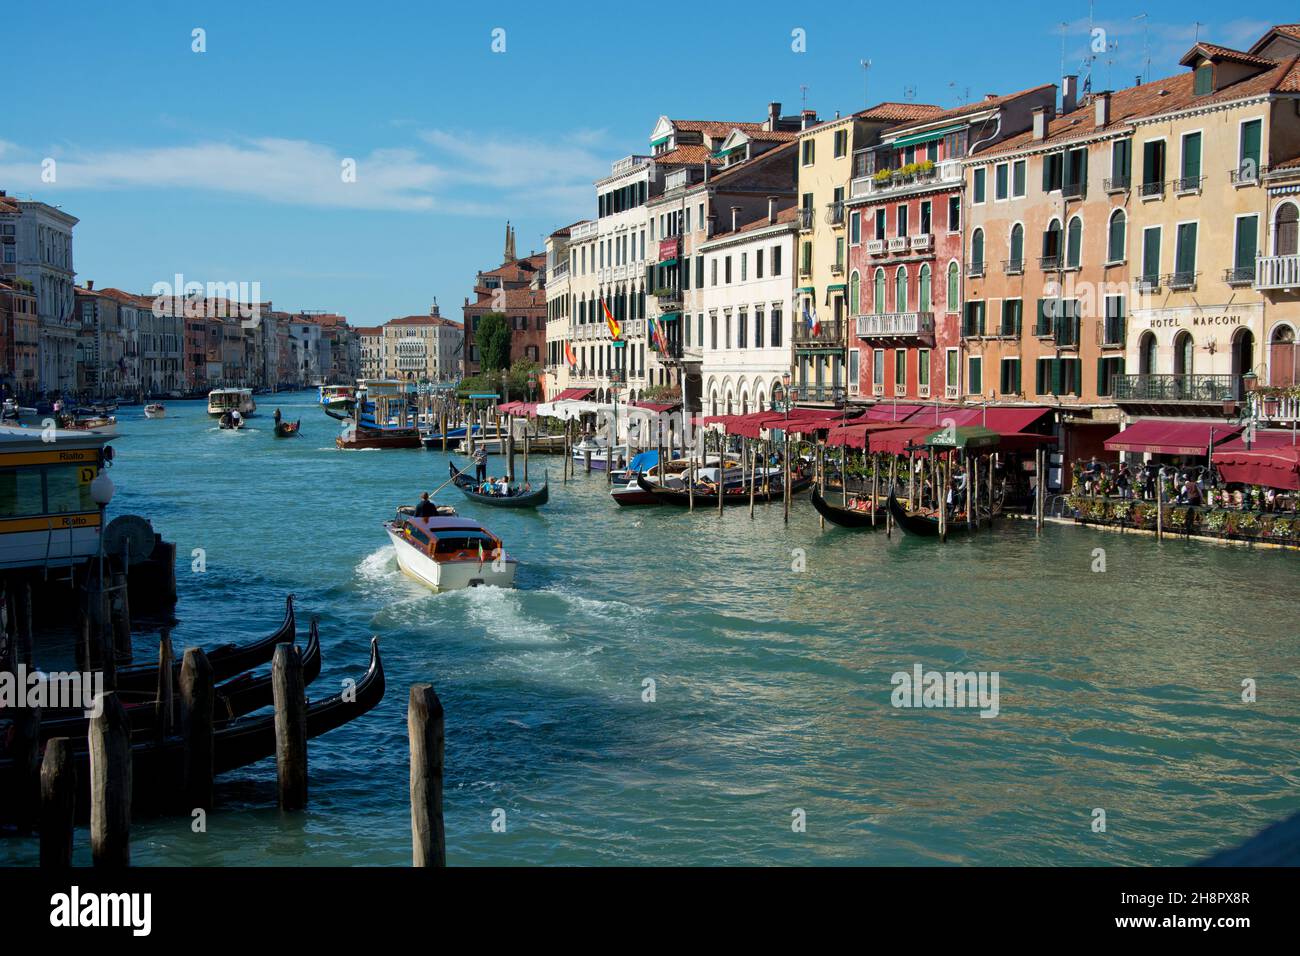 Eindrücke aus den Kanälen Venedigs Foto Stock